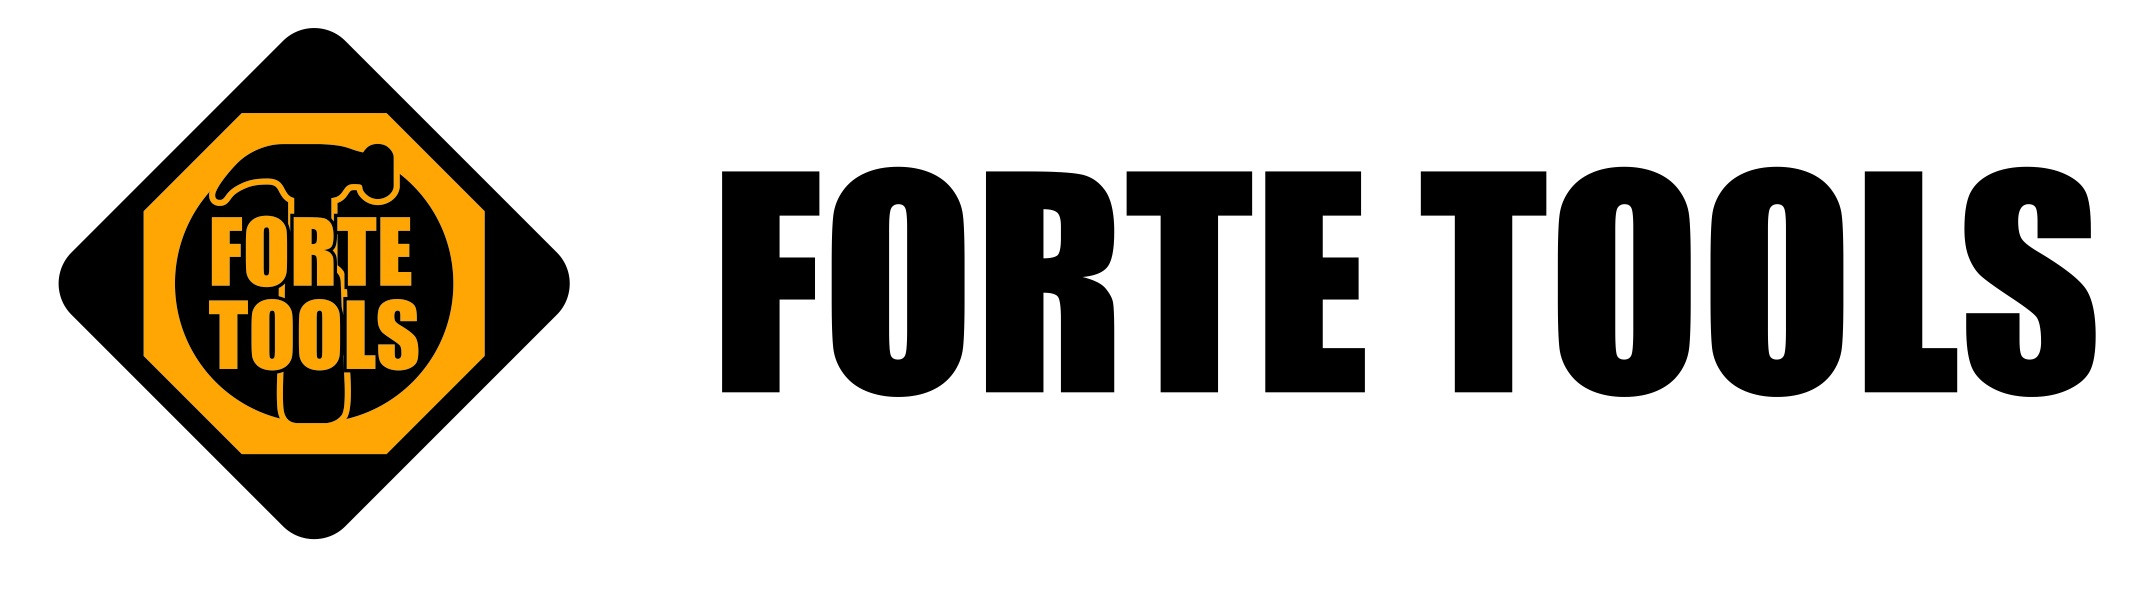 FORTE_TOOLS